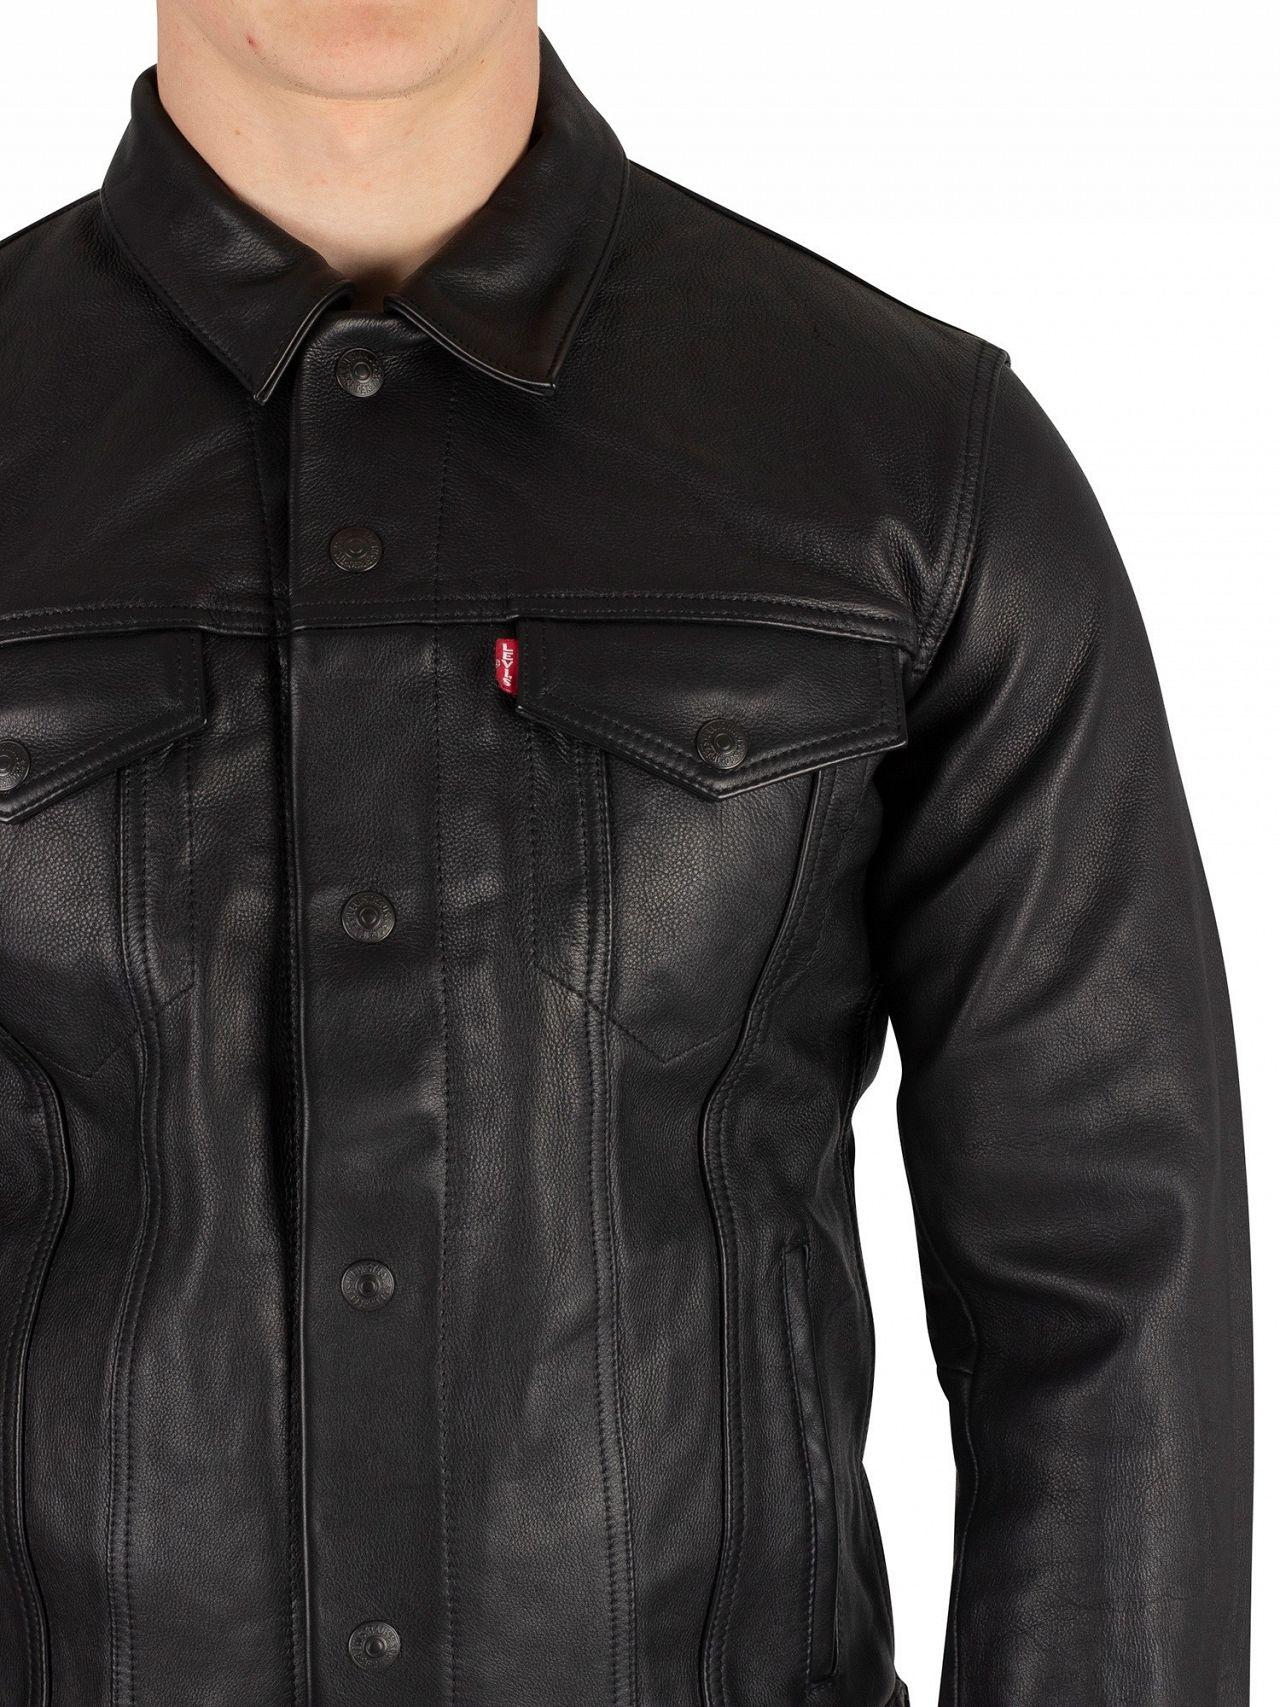 Actualizar 39+ imagen levi's leather jackets - Abzlocal.mx